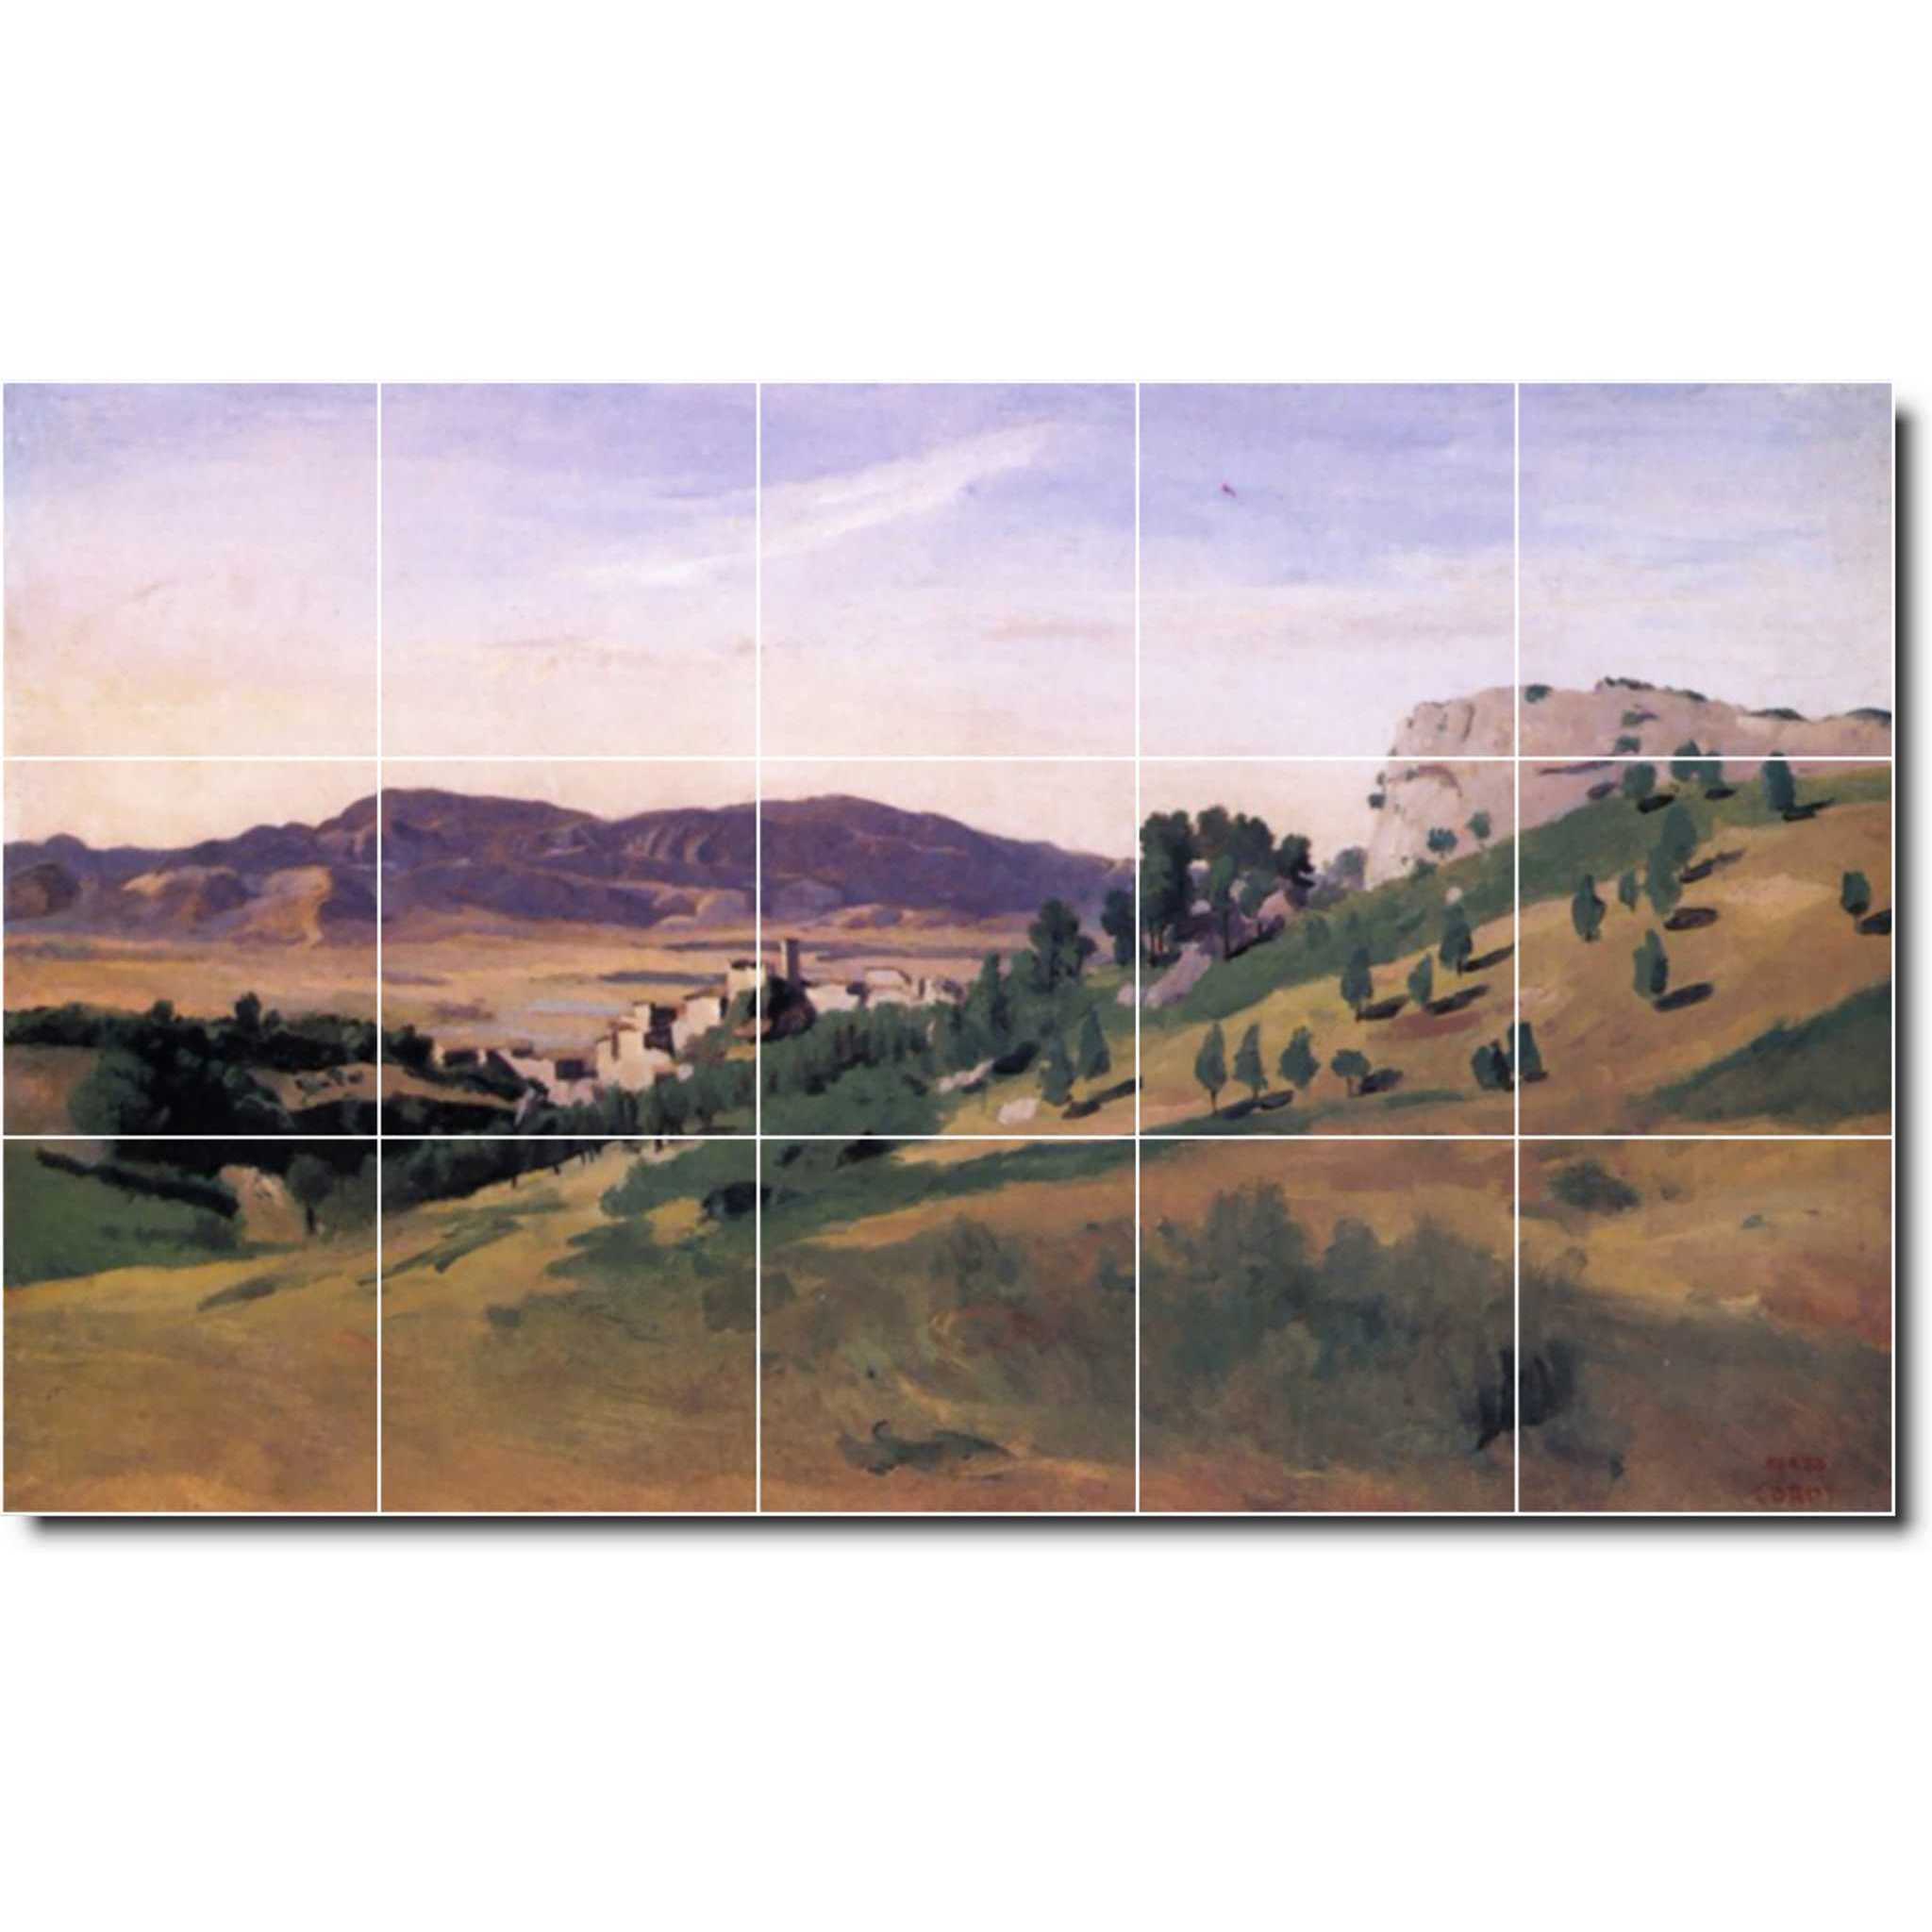 jean corot landscape painting ceramic tile mural p02101